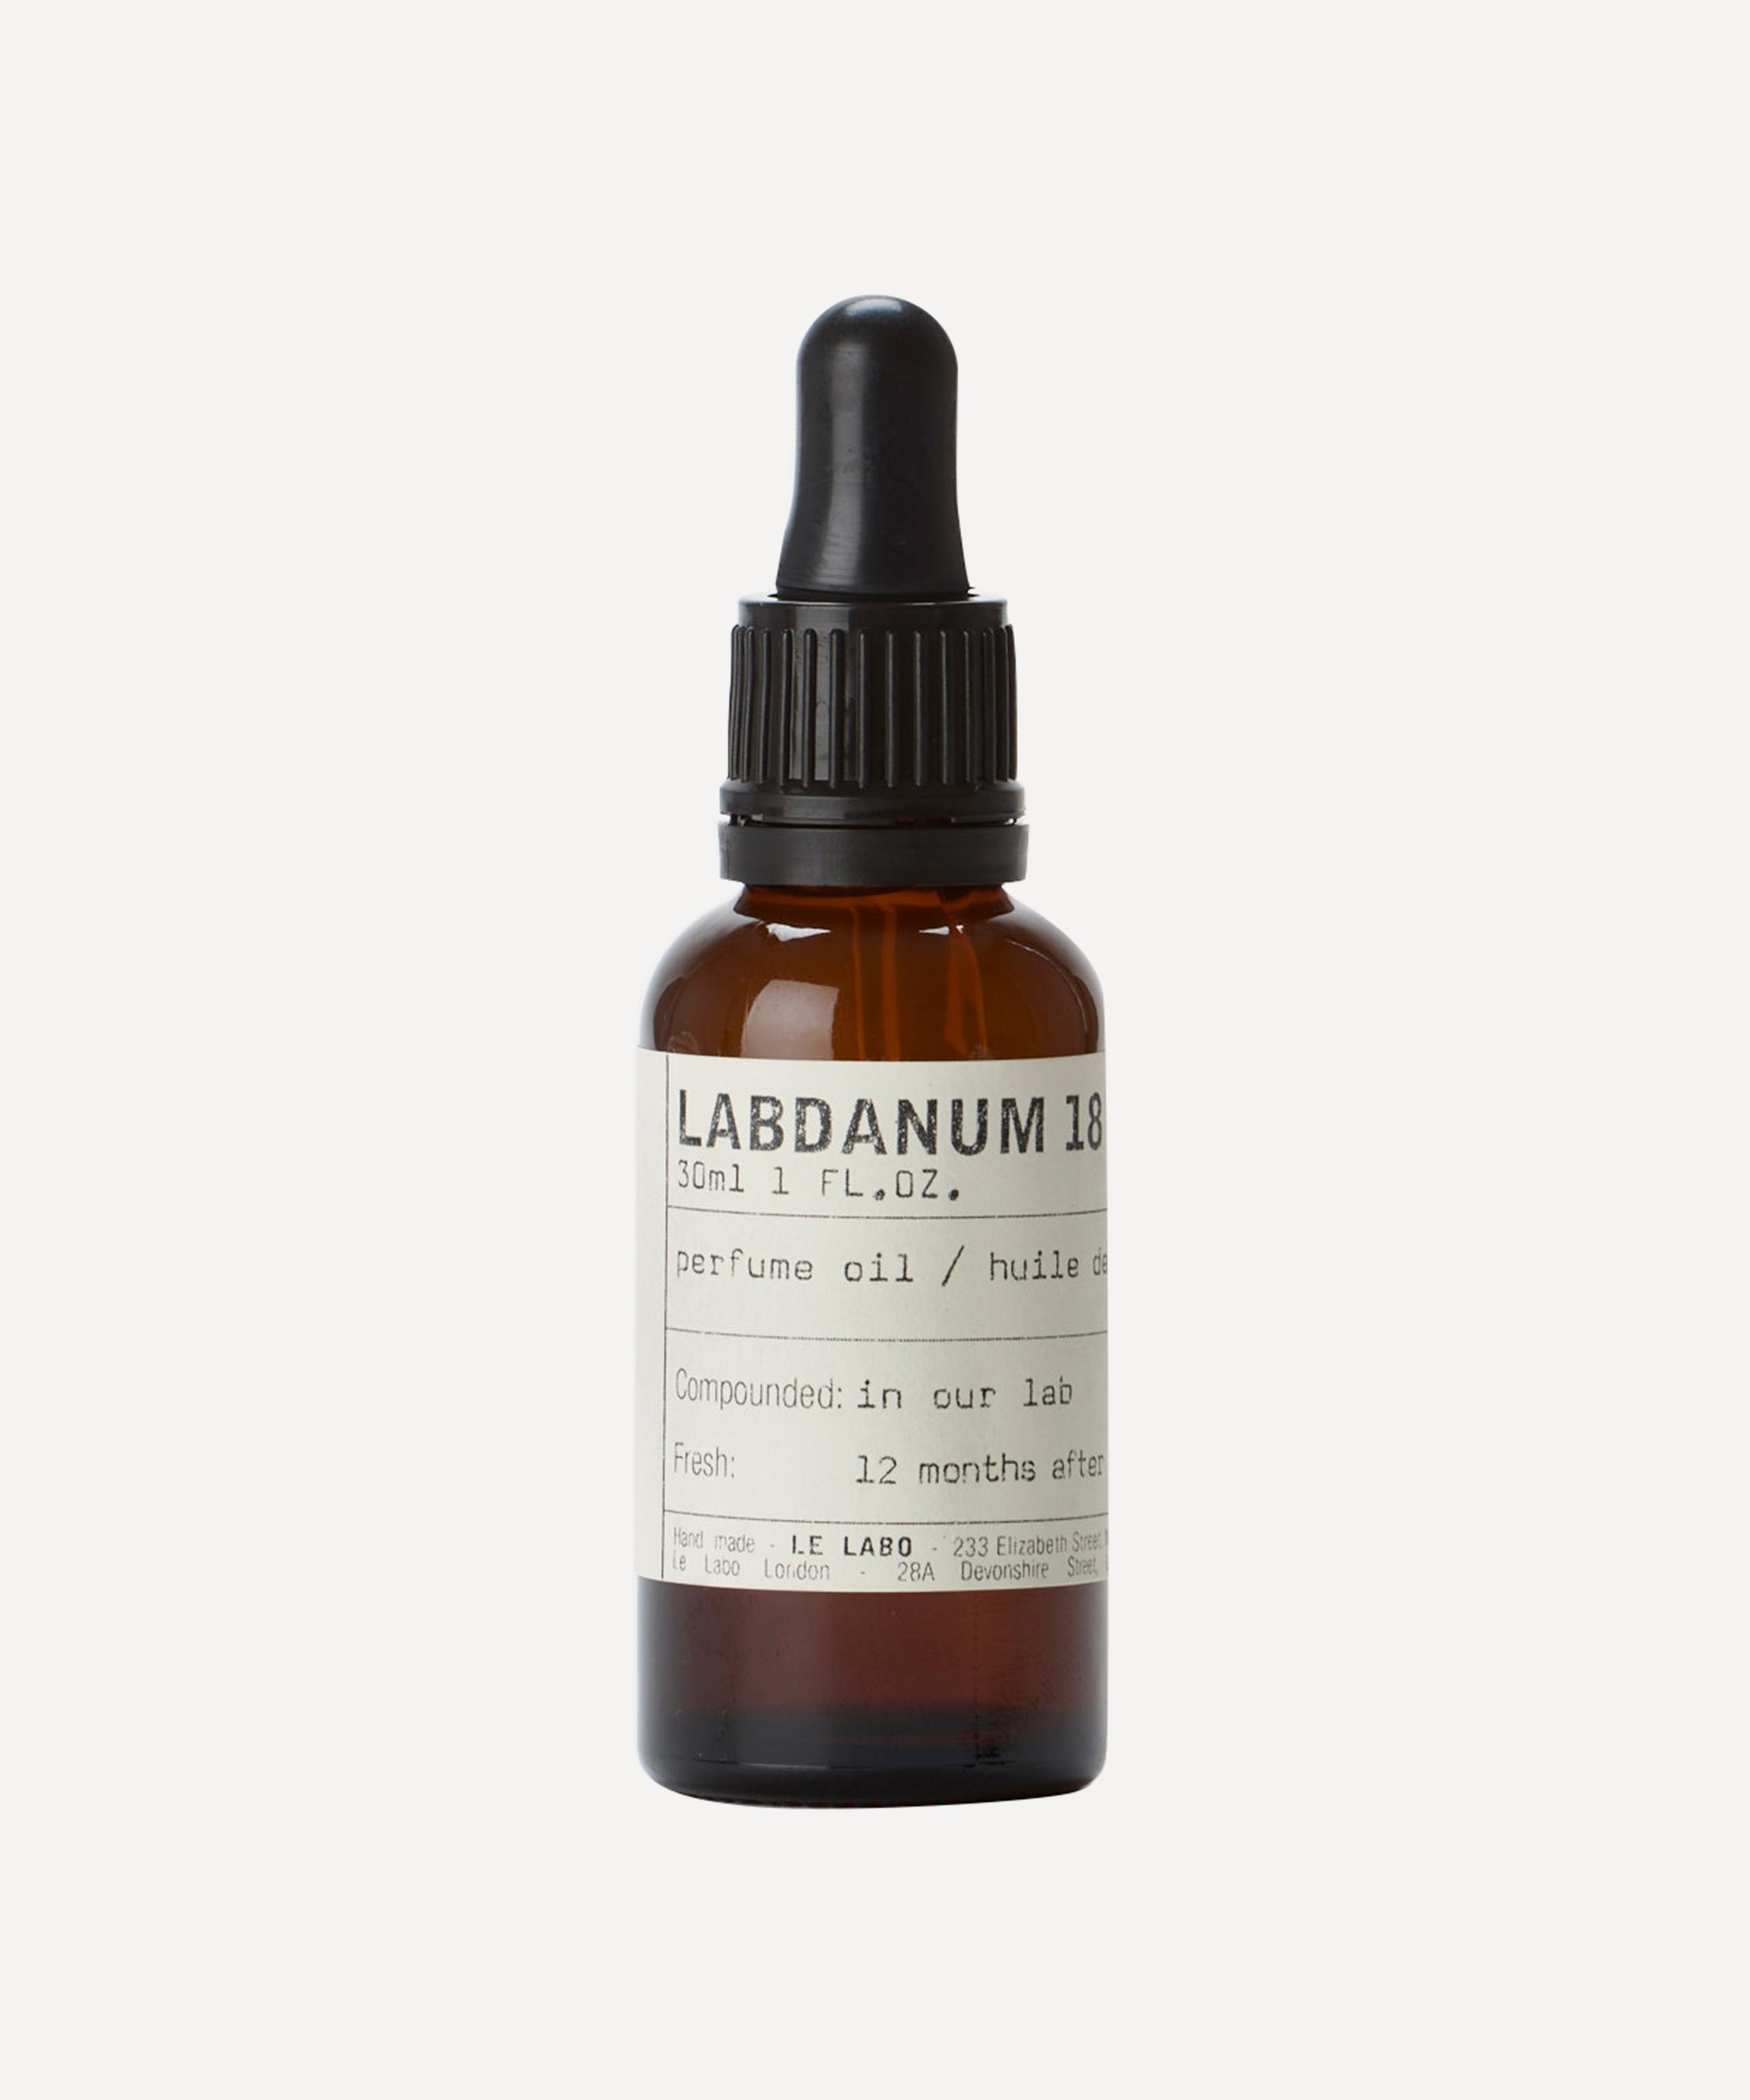 Labdanum 18 Perfume Oil 30ml | Liberty London